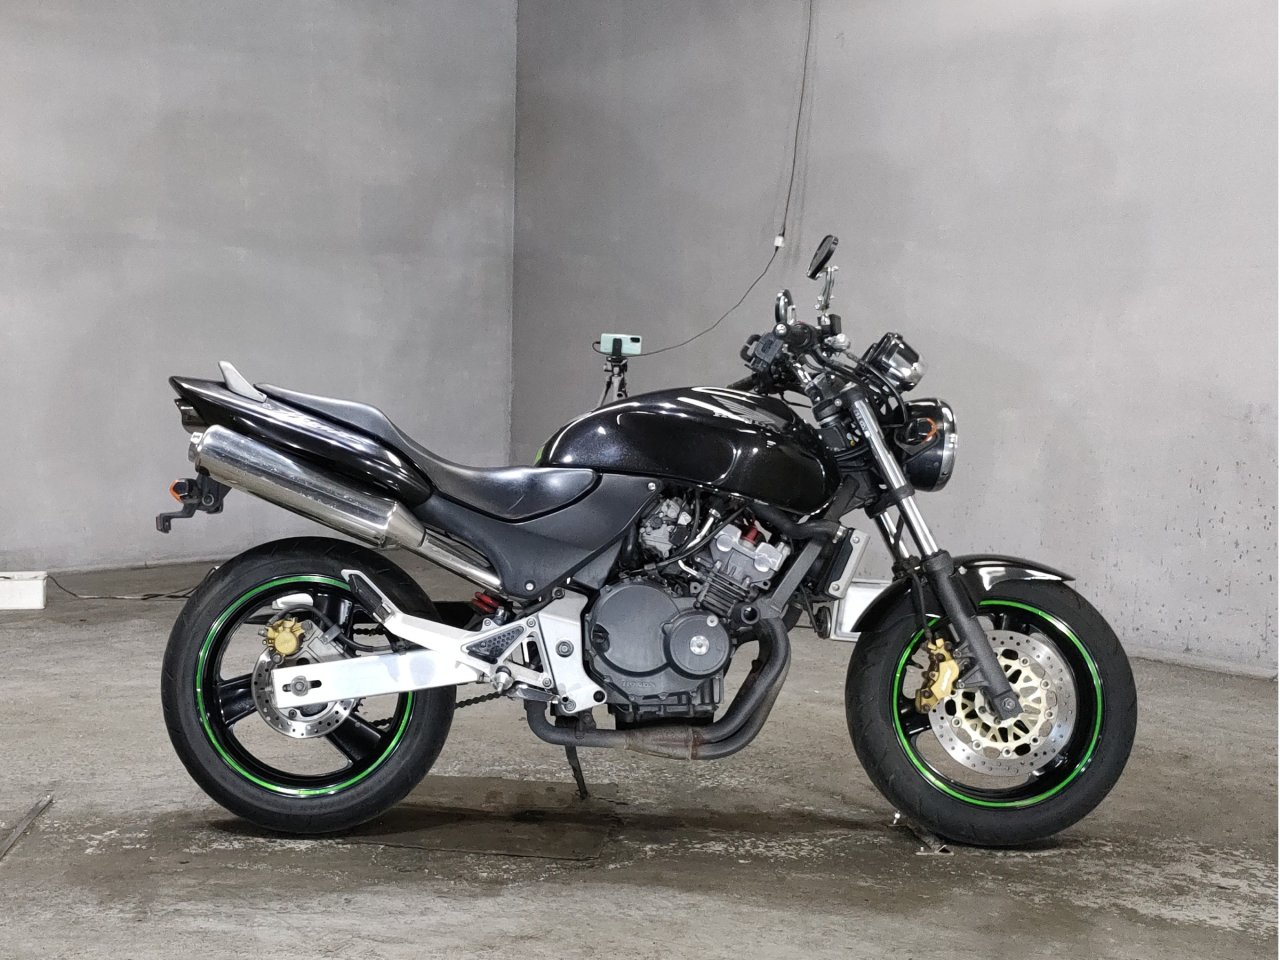 Honda Hornet 250 - Adamoto - Motorcycles from Japan